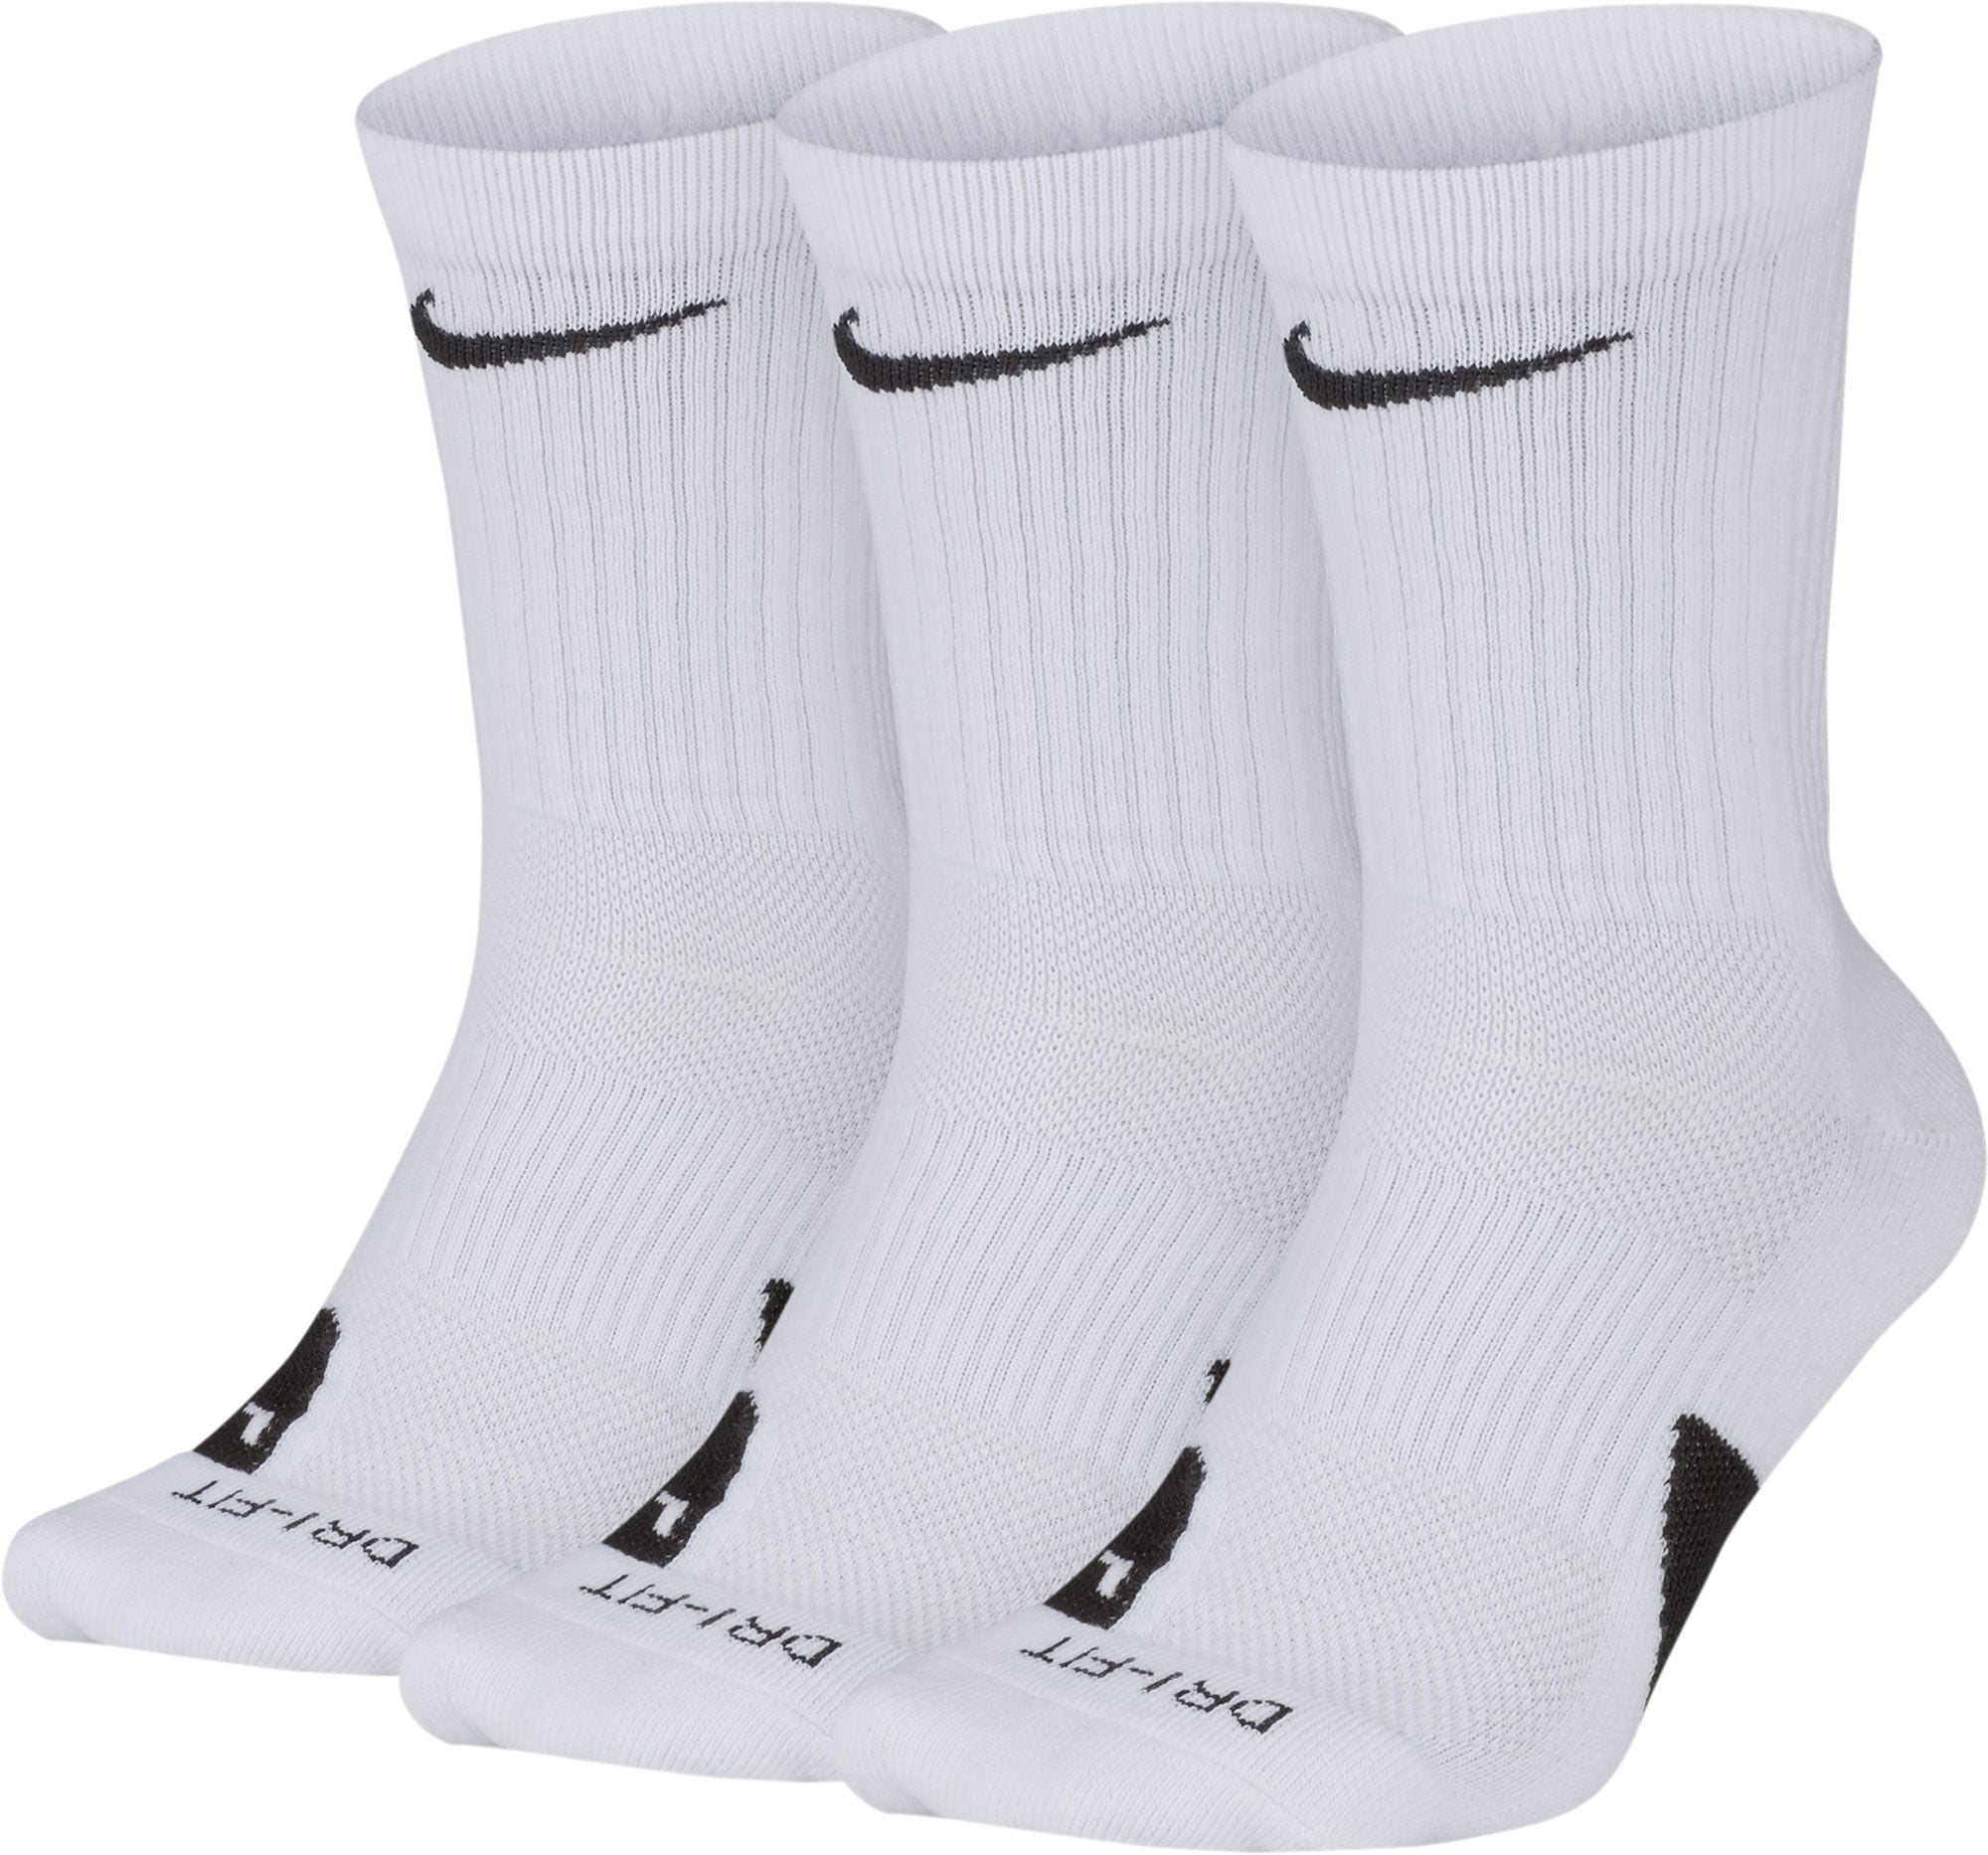 Nike Elite Basketball Crew Socks 3 Pack Walmart.com